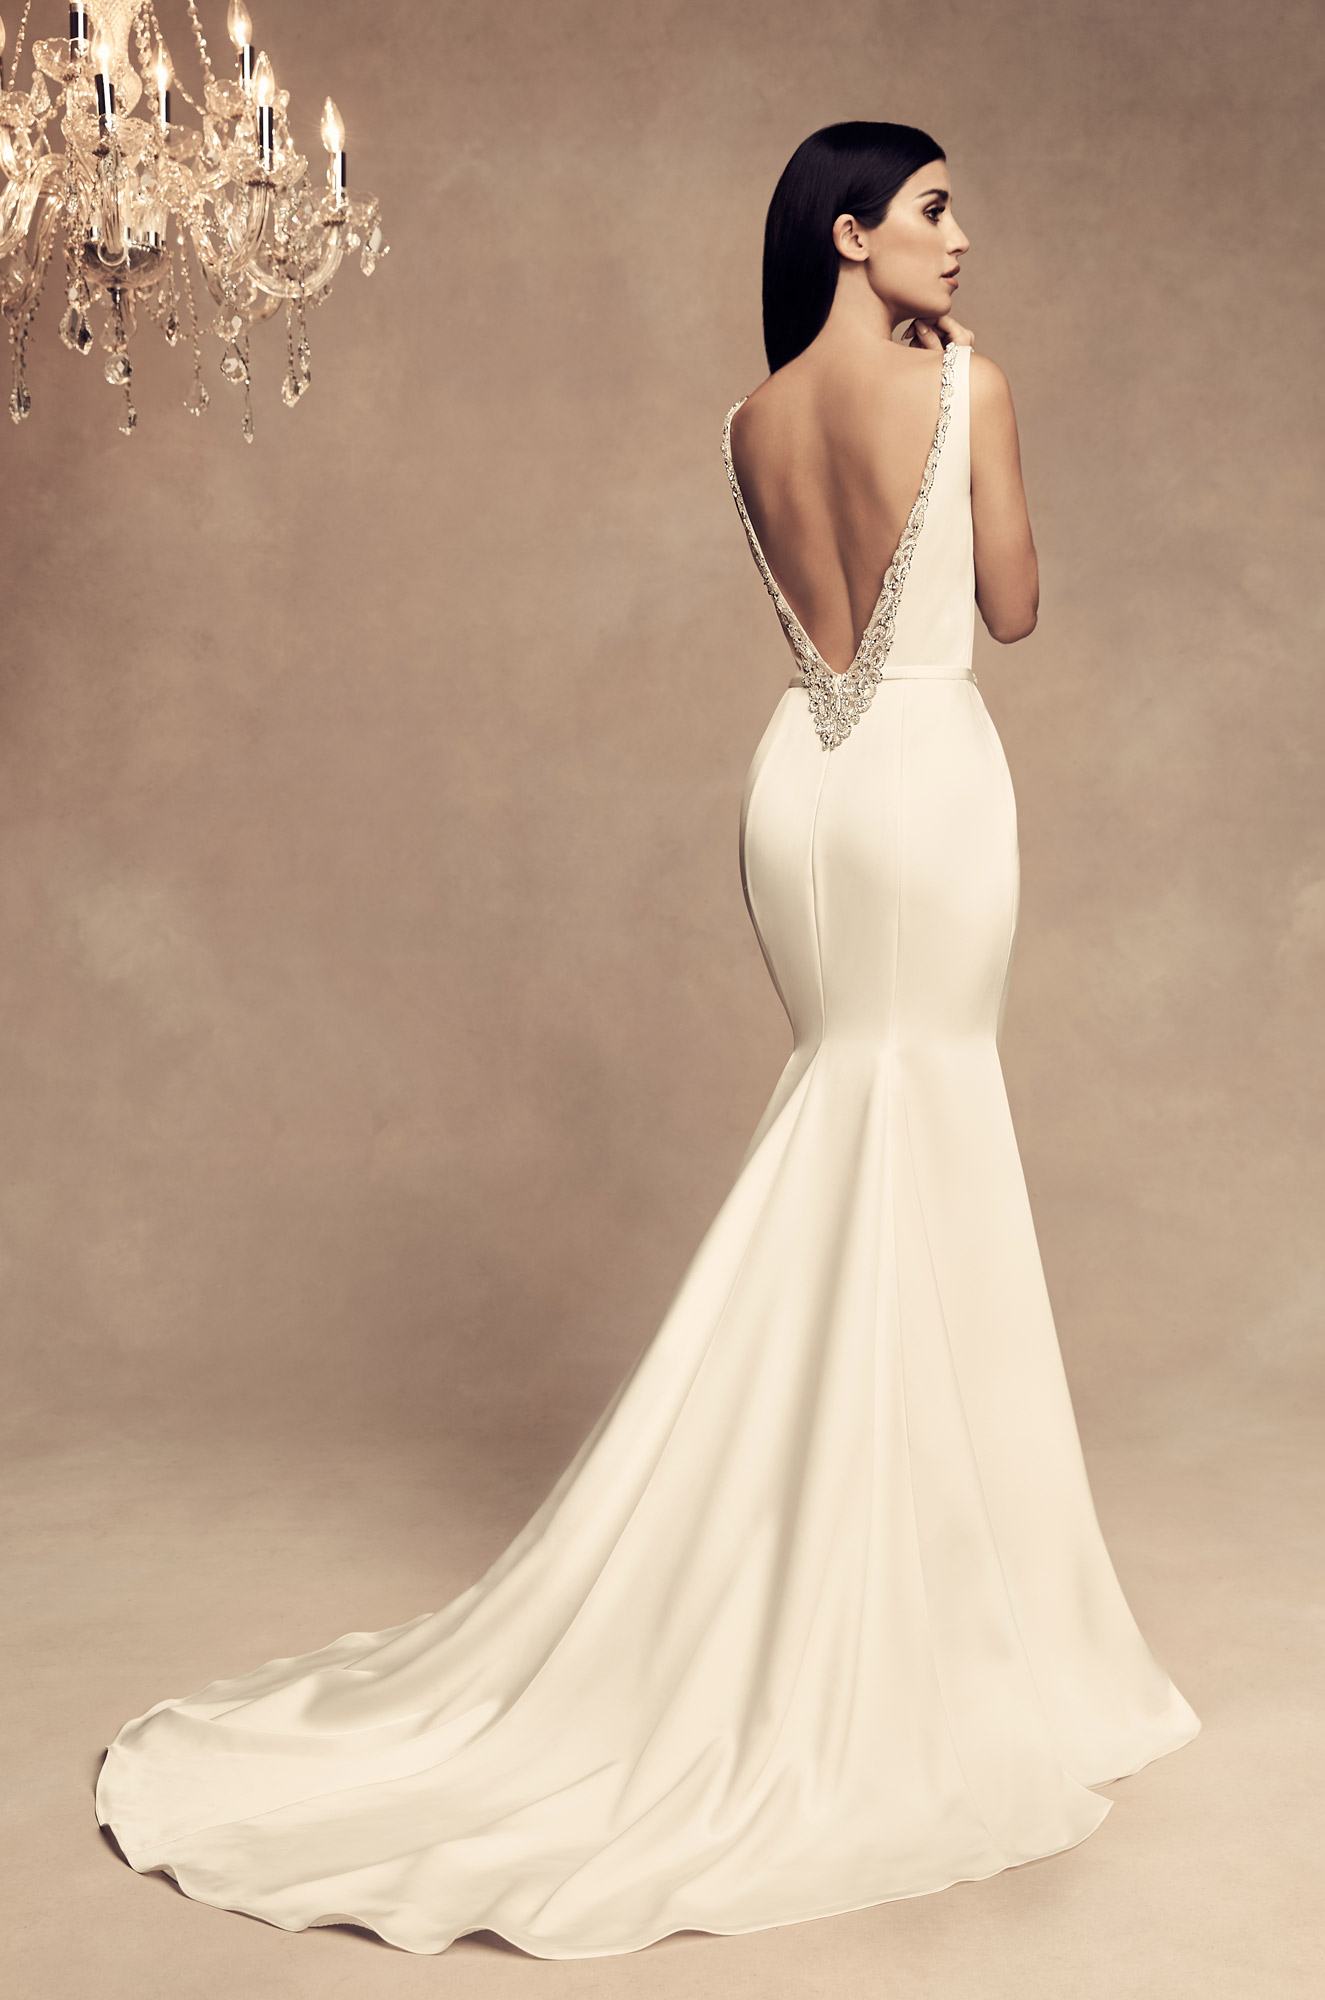 Model wearing a white dress 15